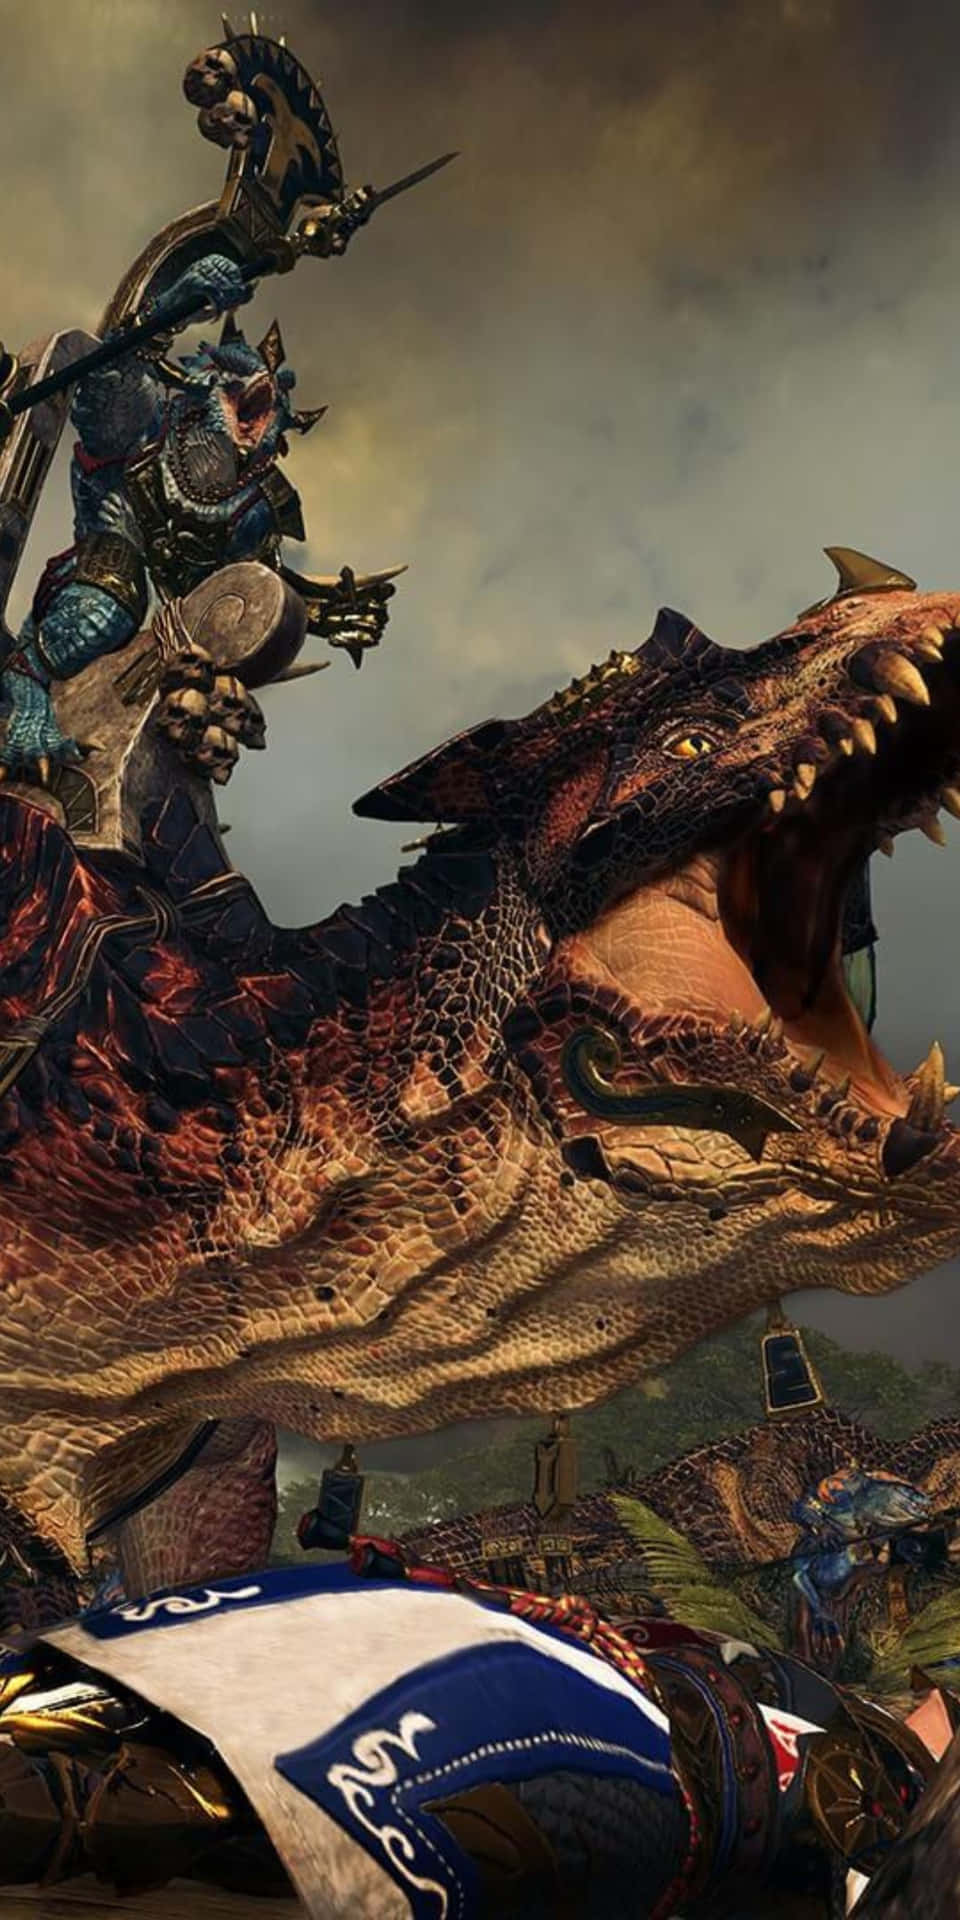 Pixel3 Total War Warhammer Ii Bakgrundsbild Med Högljudda Strider.